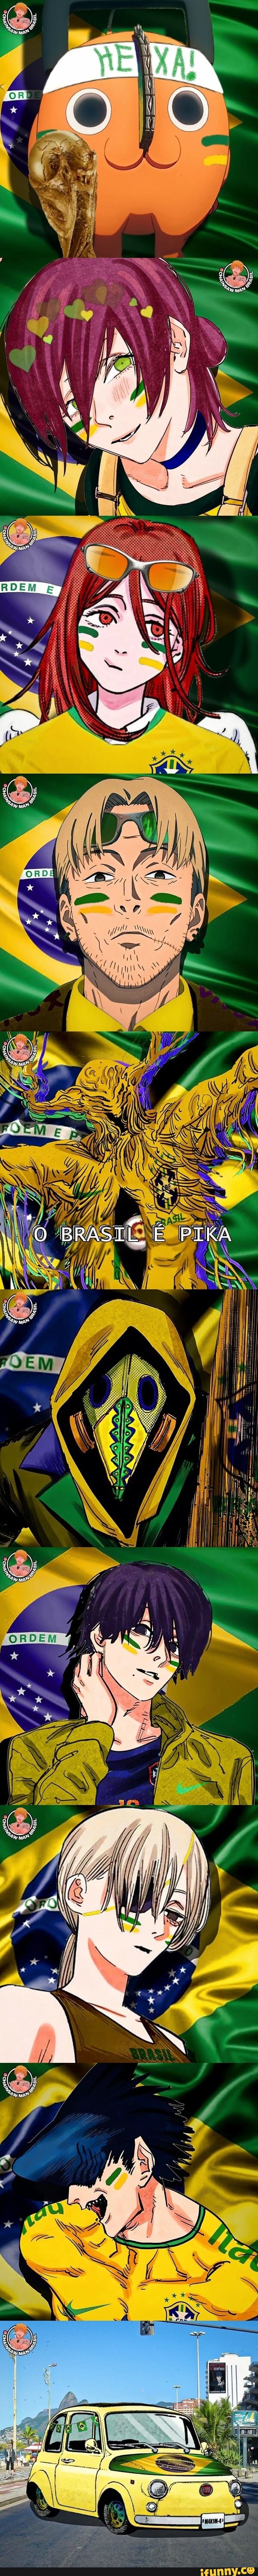 Memes de imagem rDRliplp9 por helicptero - iFunny Brazil